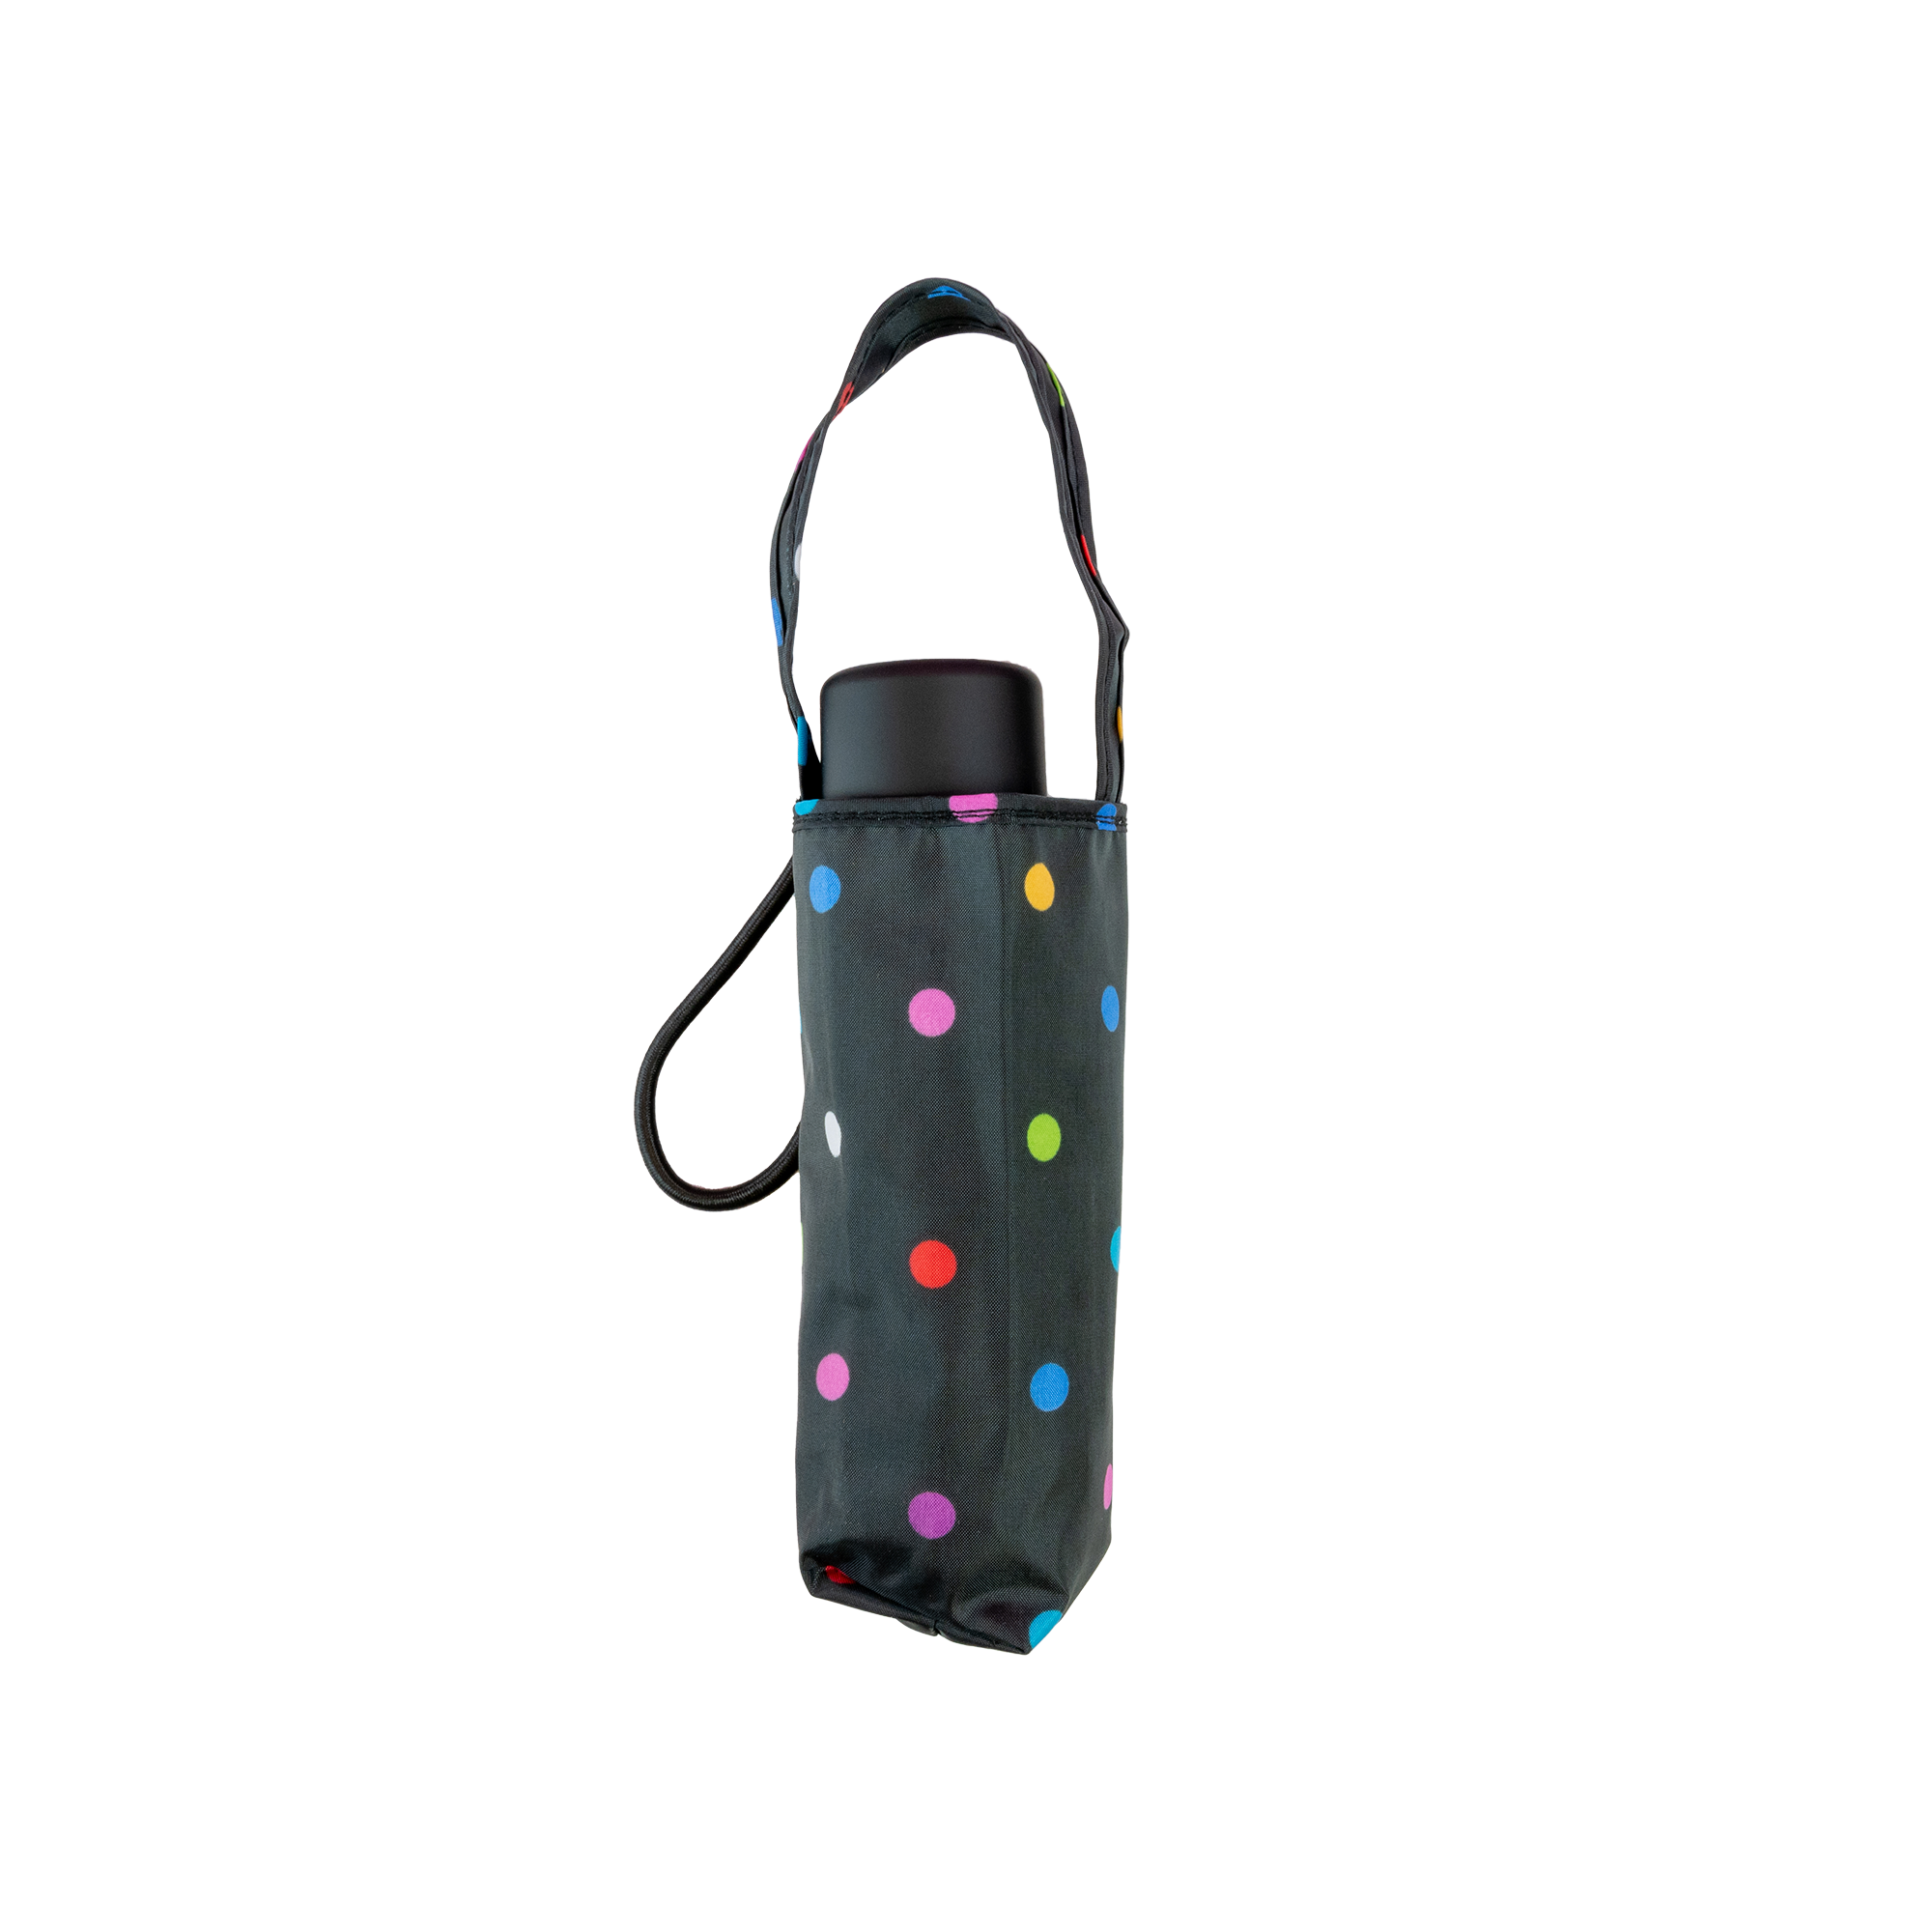 totes Mini Travel Umbrella - polka dot with bag